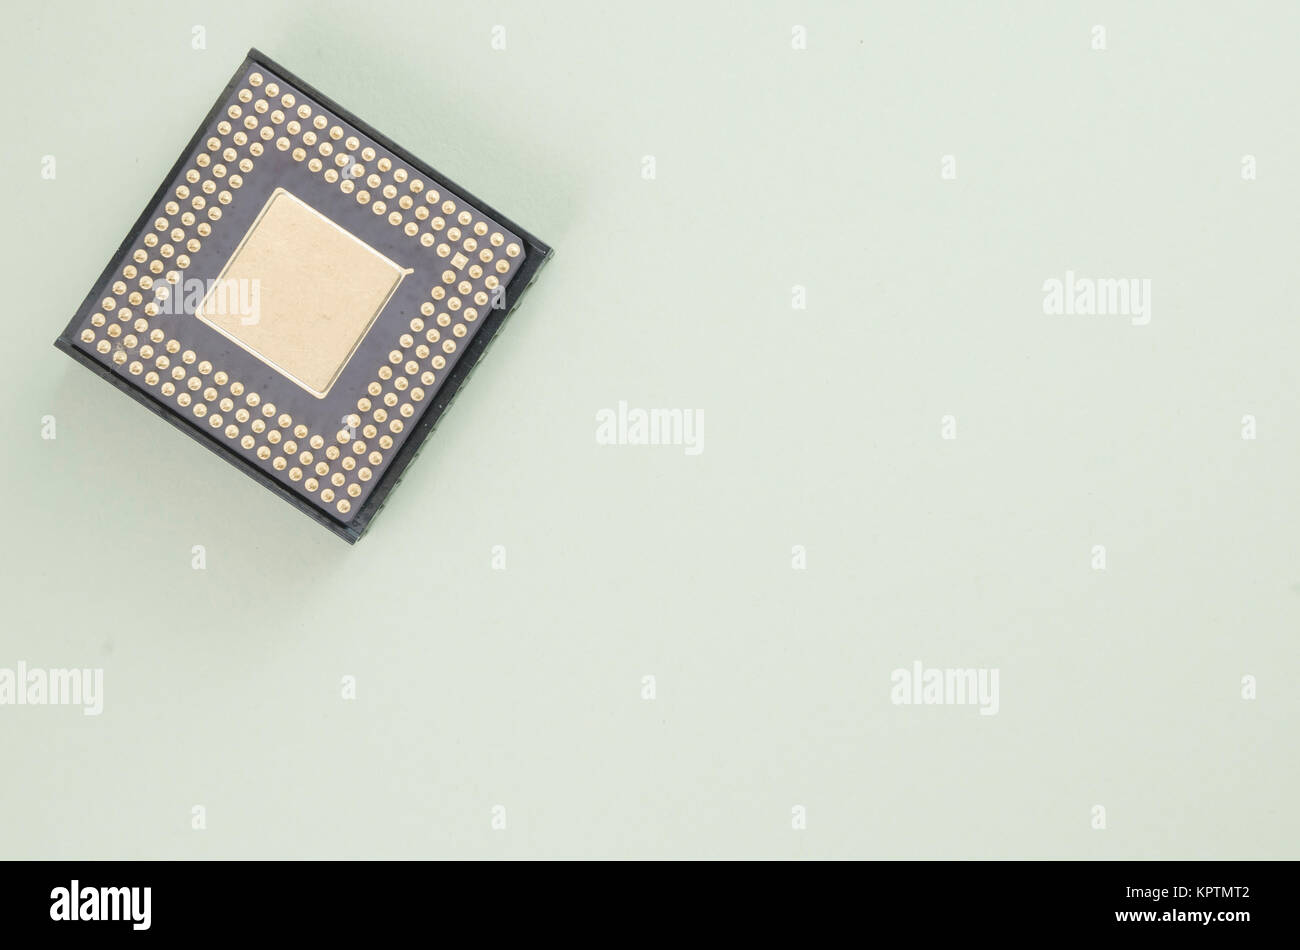 microprocessor digital integrated circuit die package - pins side view Stock Photo